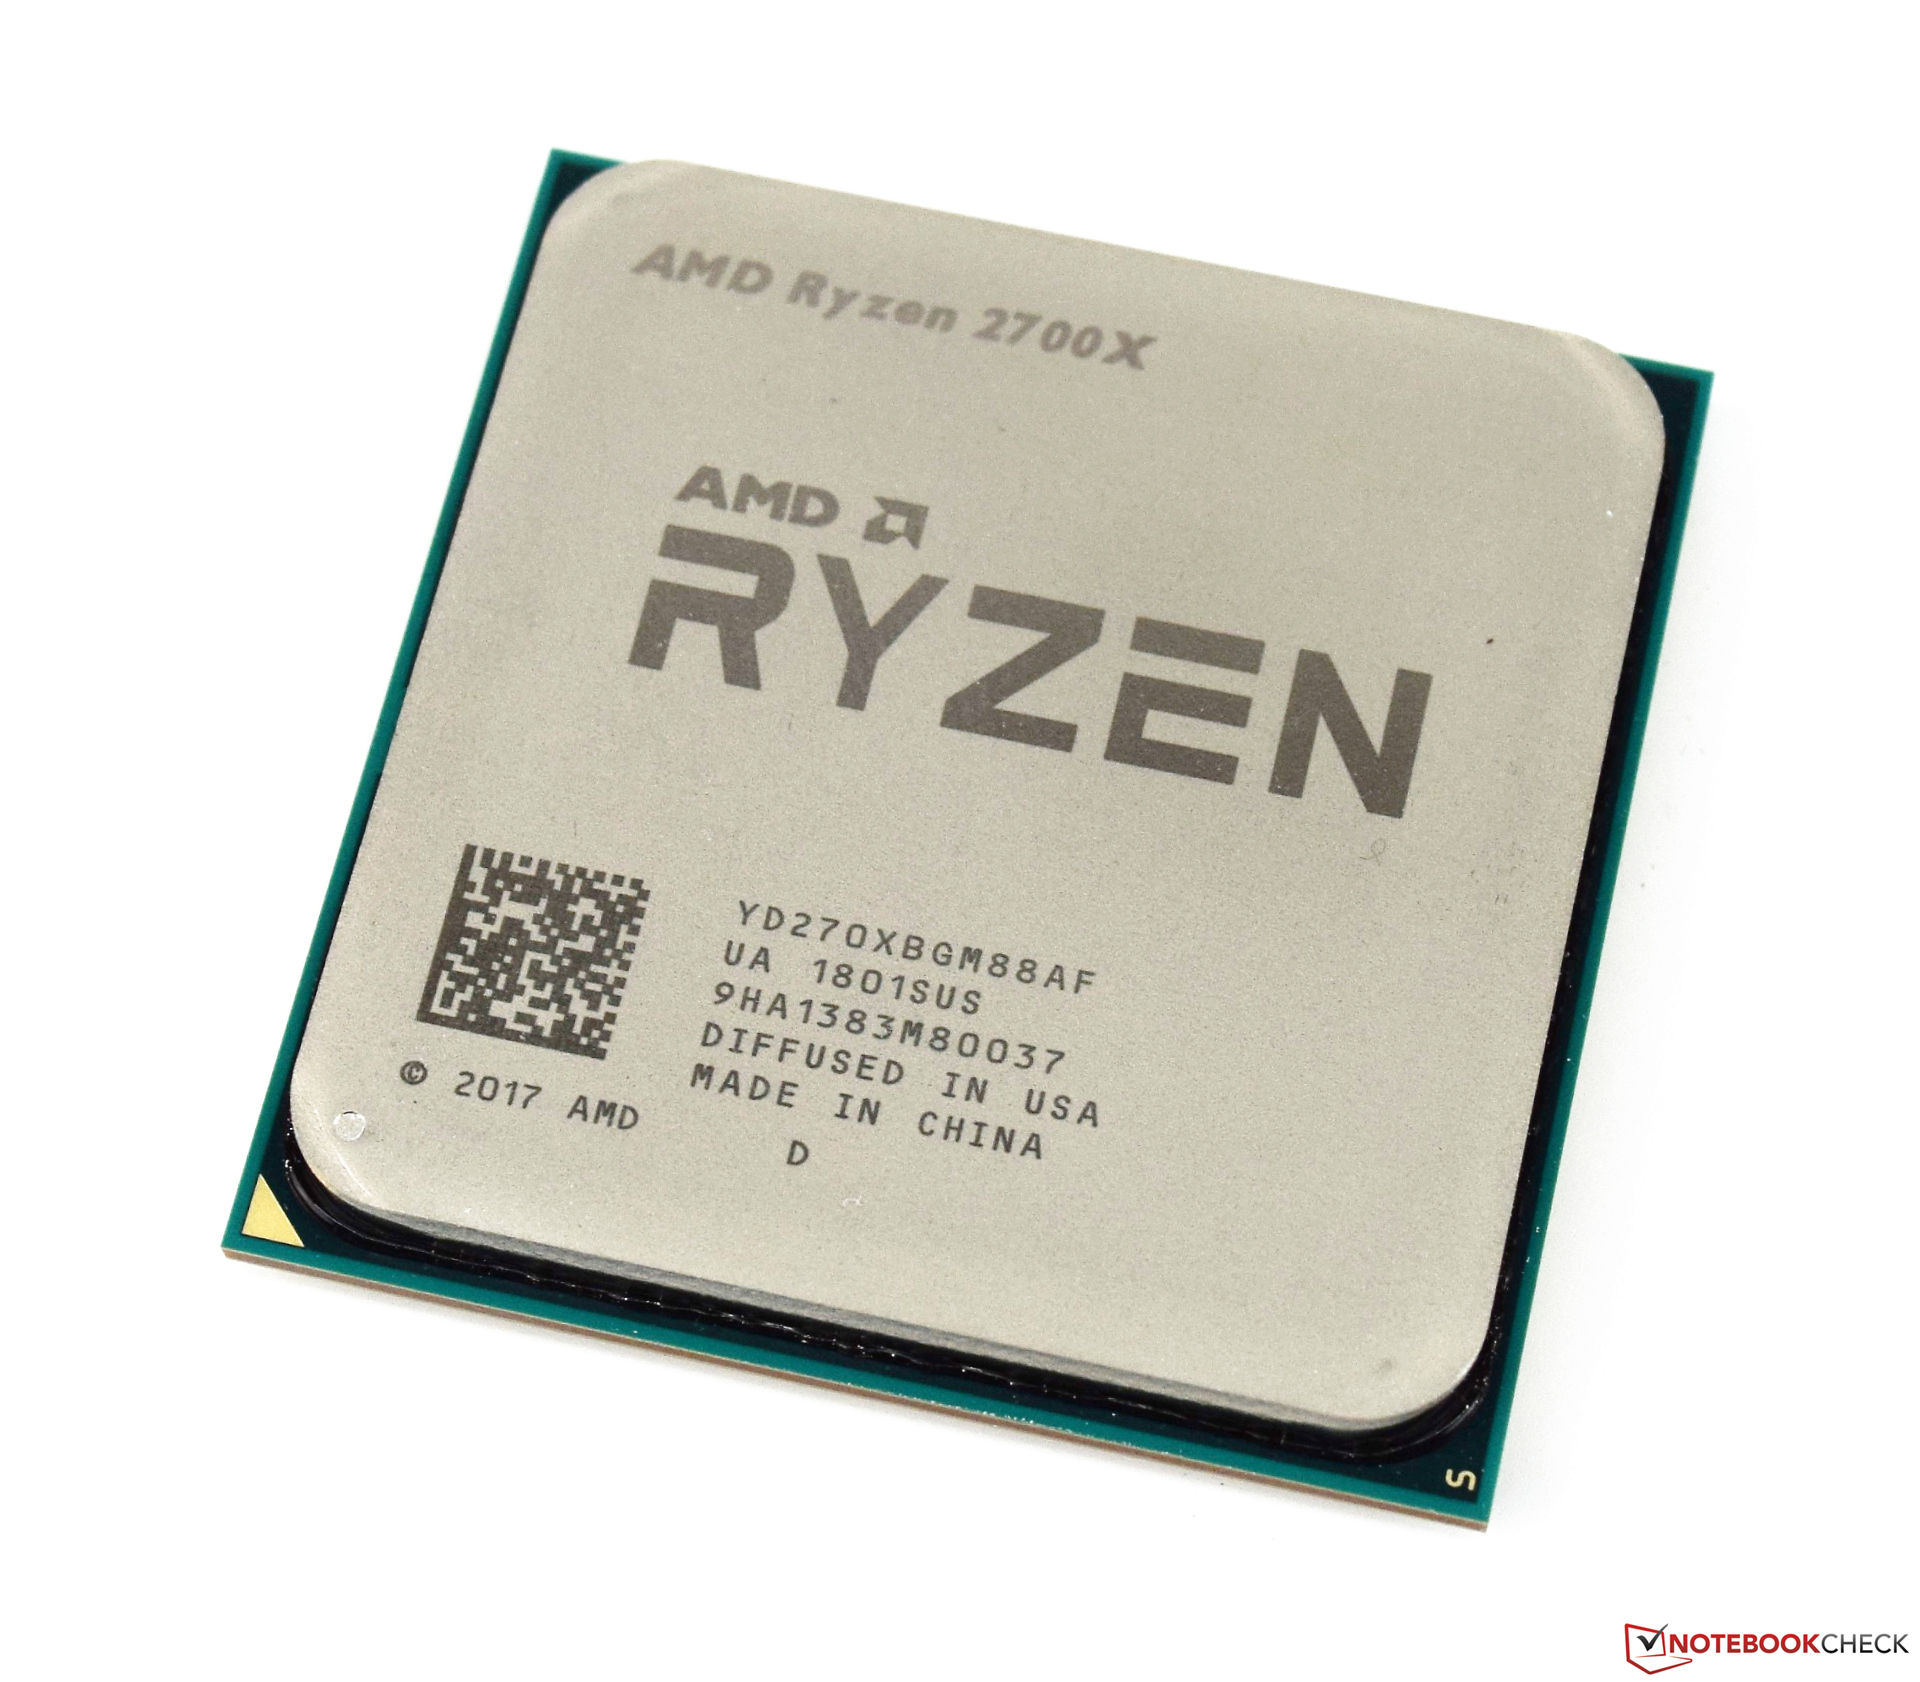 AMD Ryzen 7 2700X vs AMD Ryzen Z1 Extreme